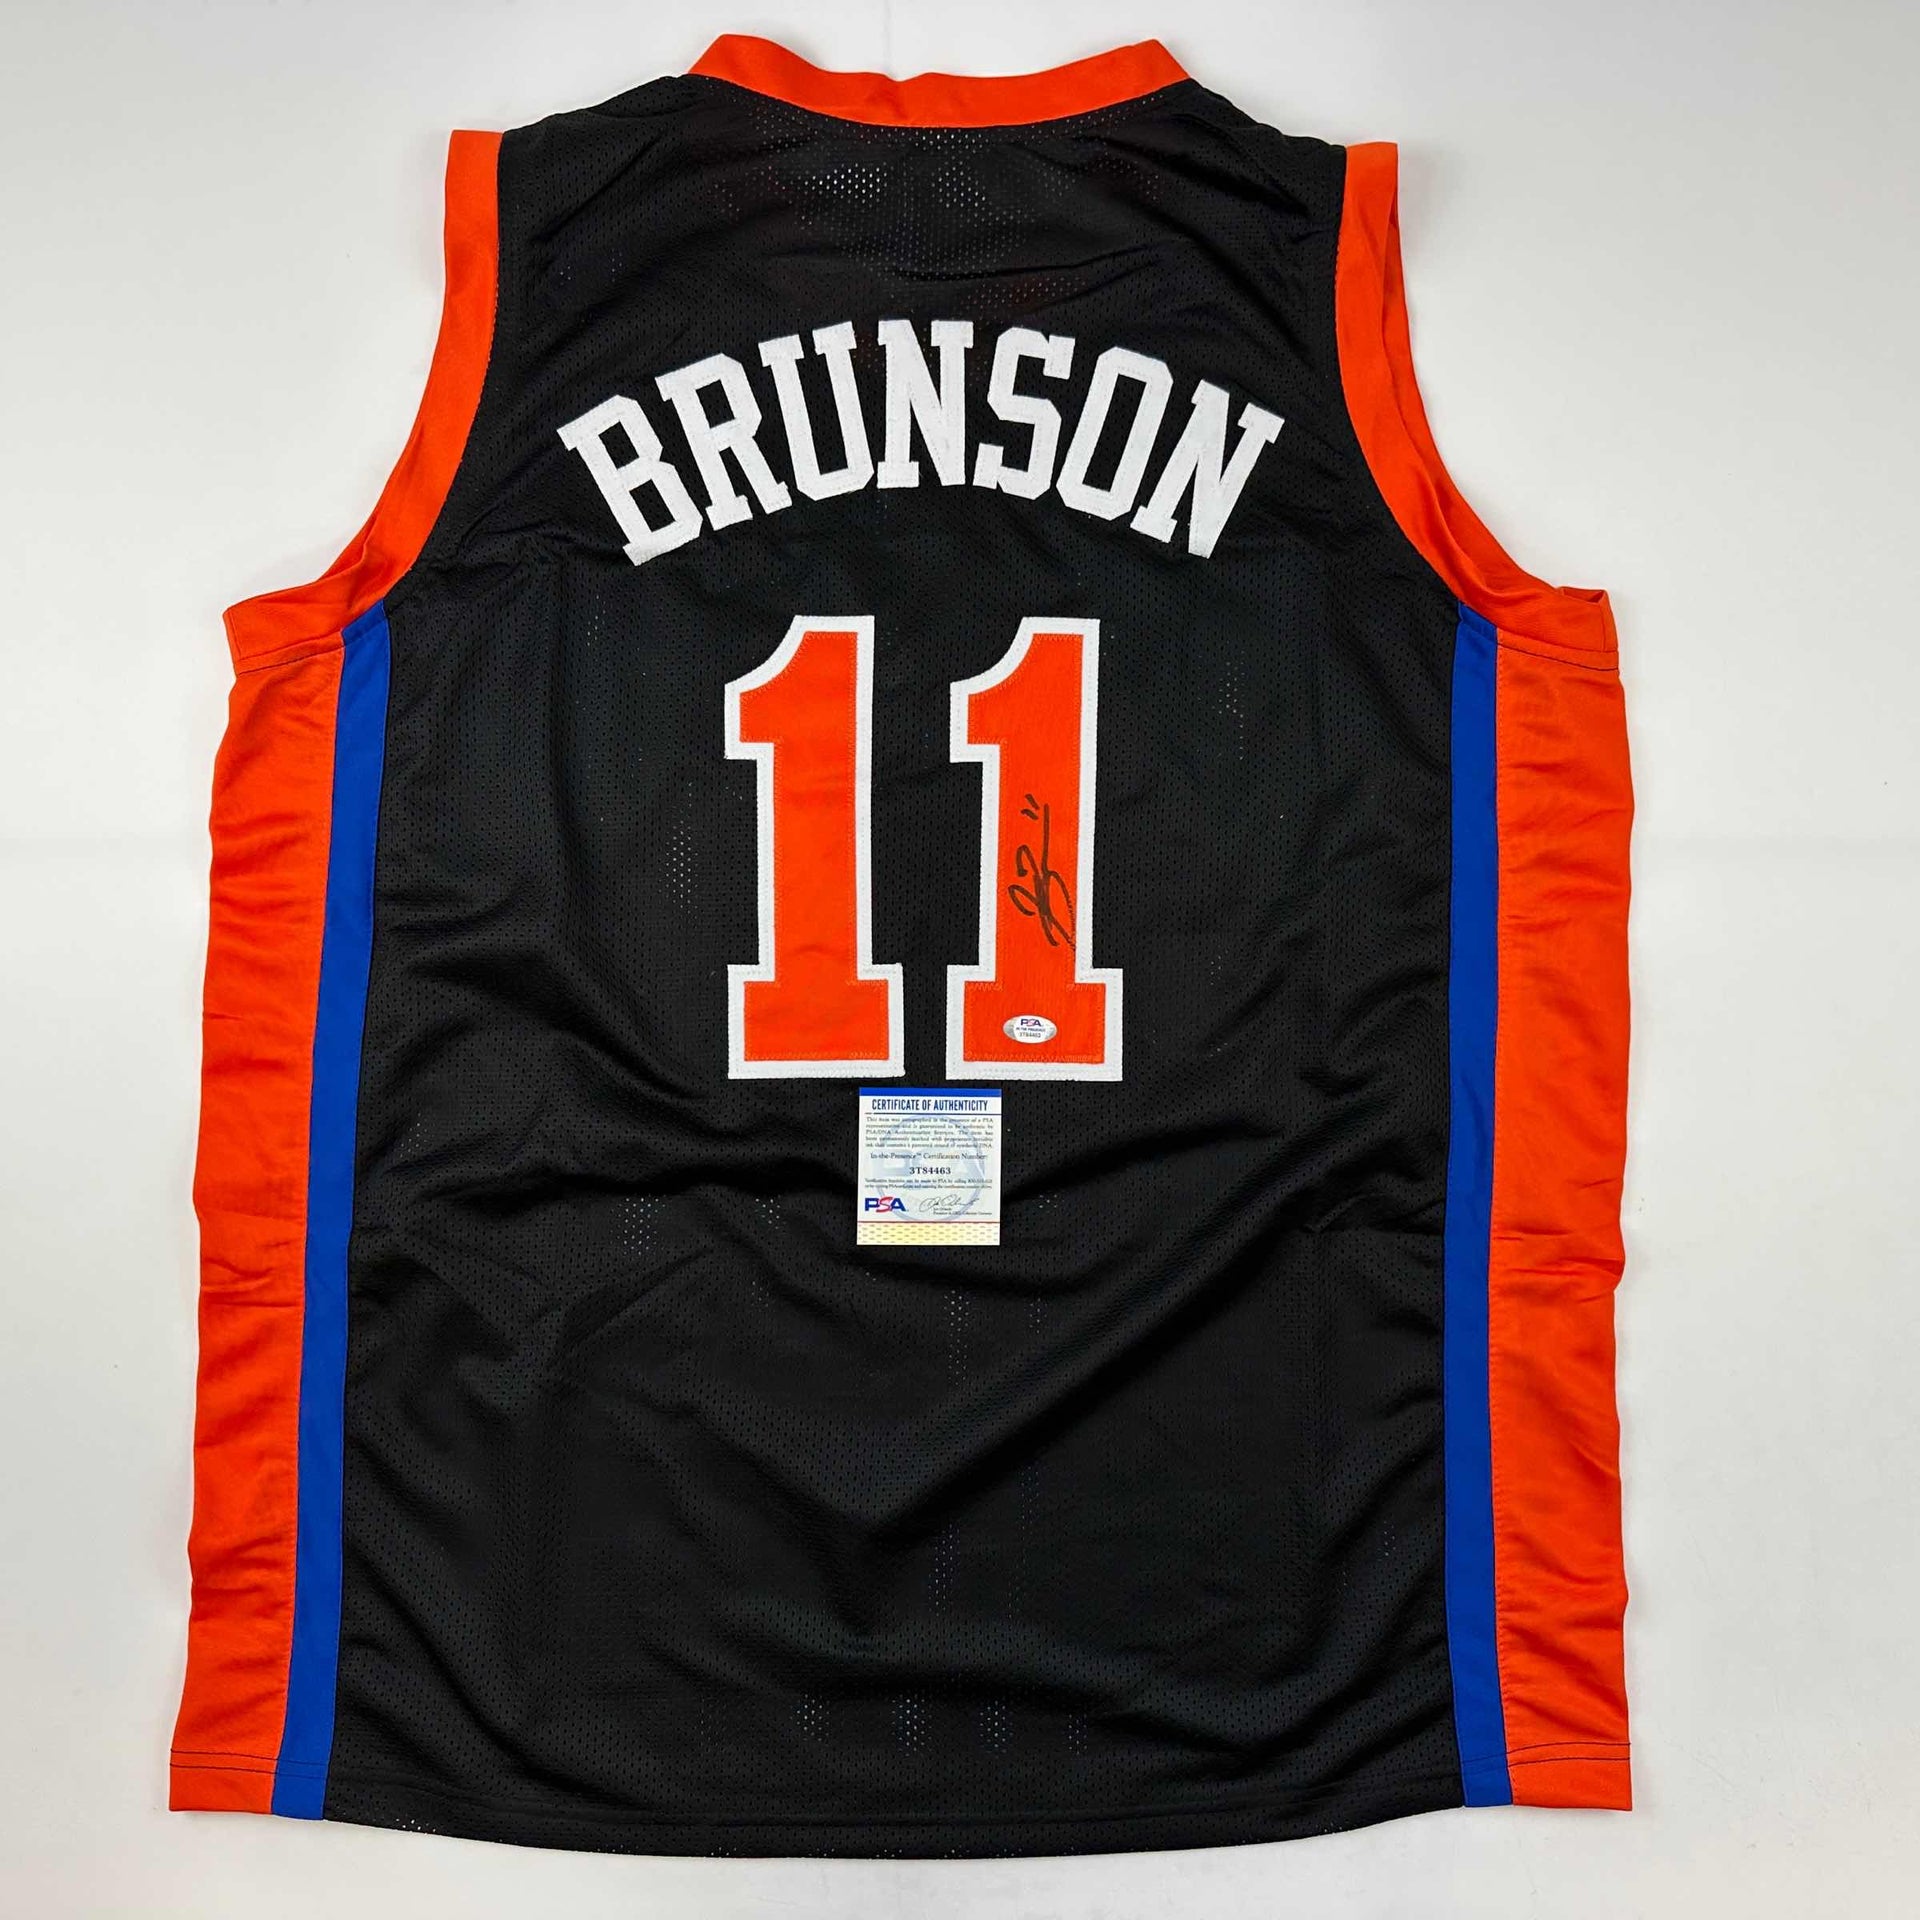 Jalen Brunson New York Knicks Autographed Basketball Jersey